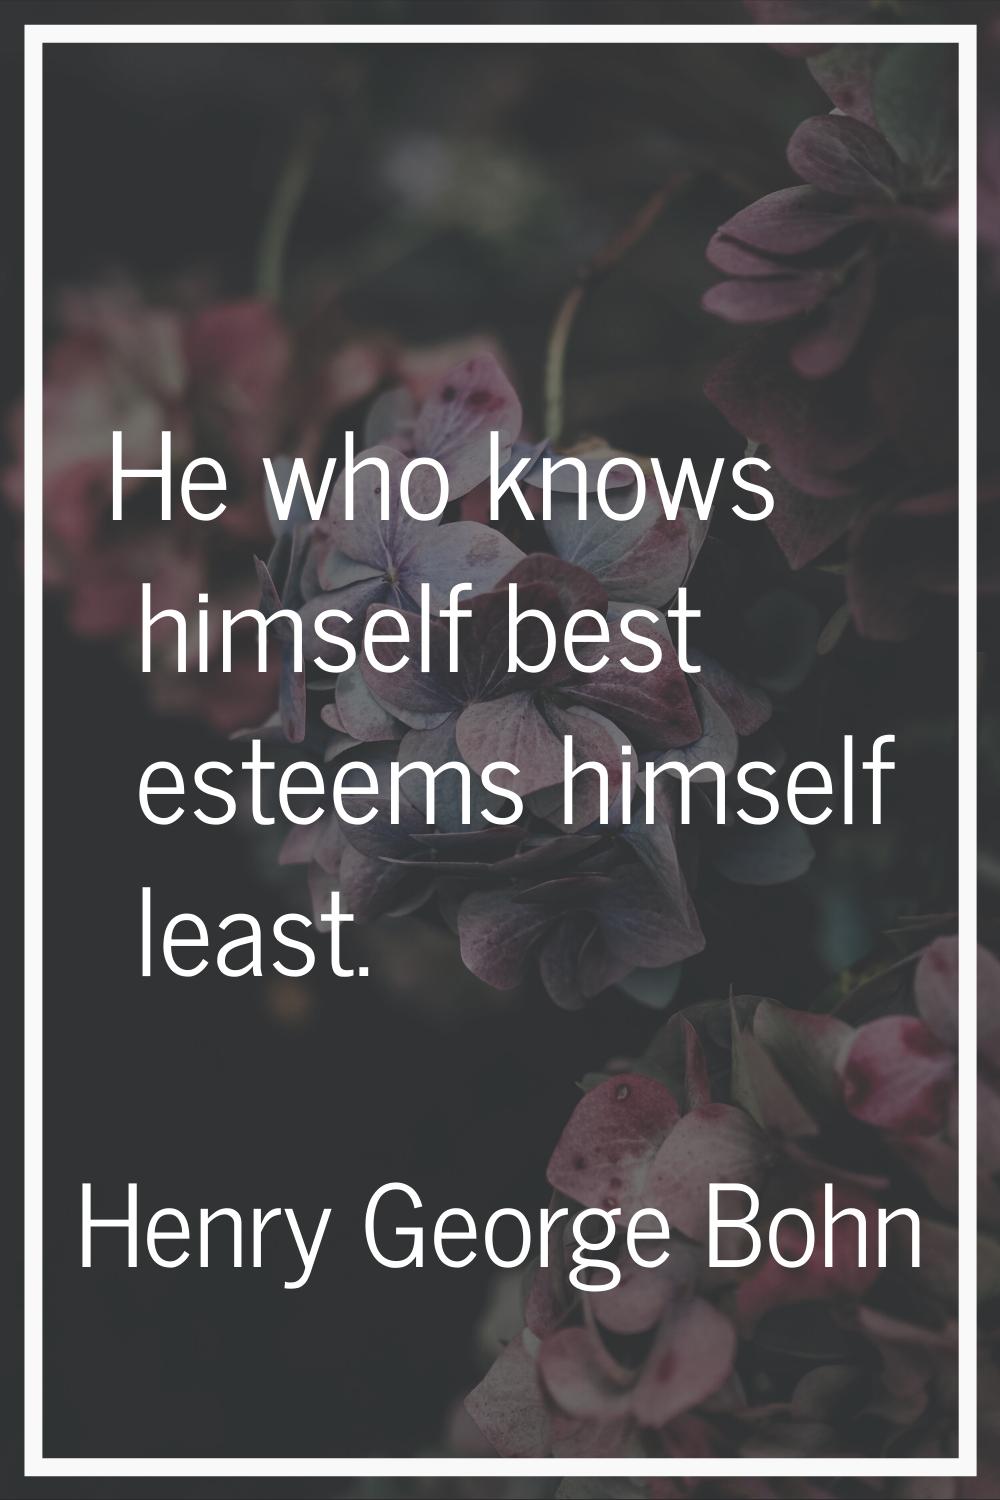 He who knows himself best esteems himself least.